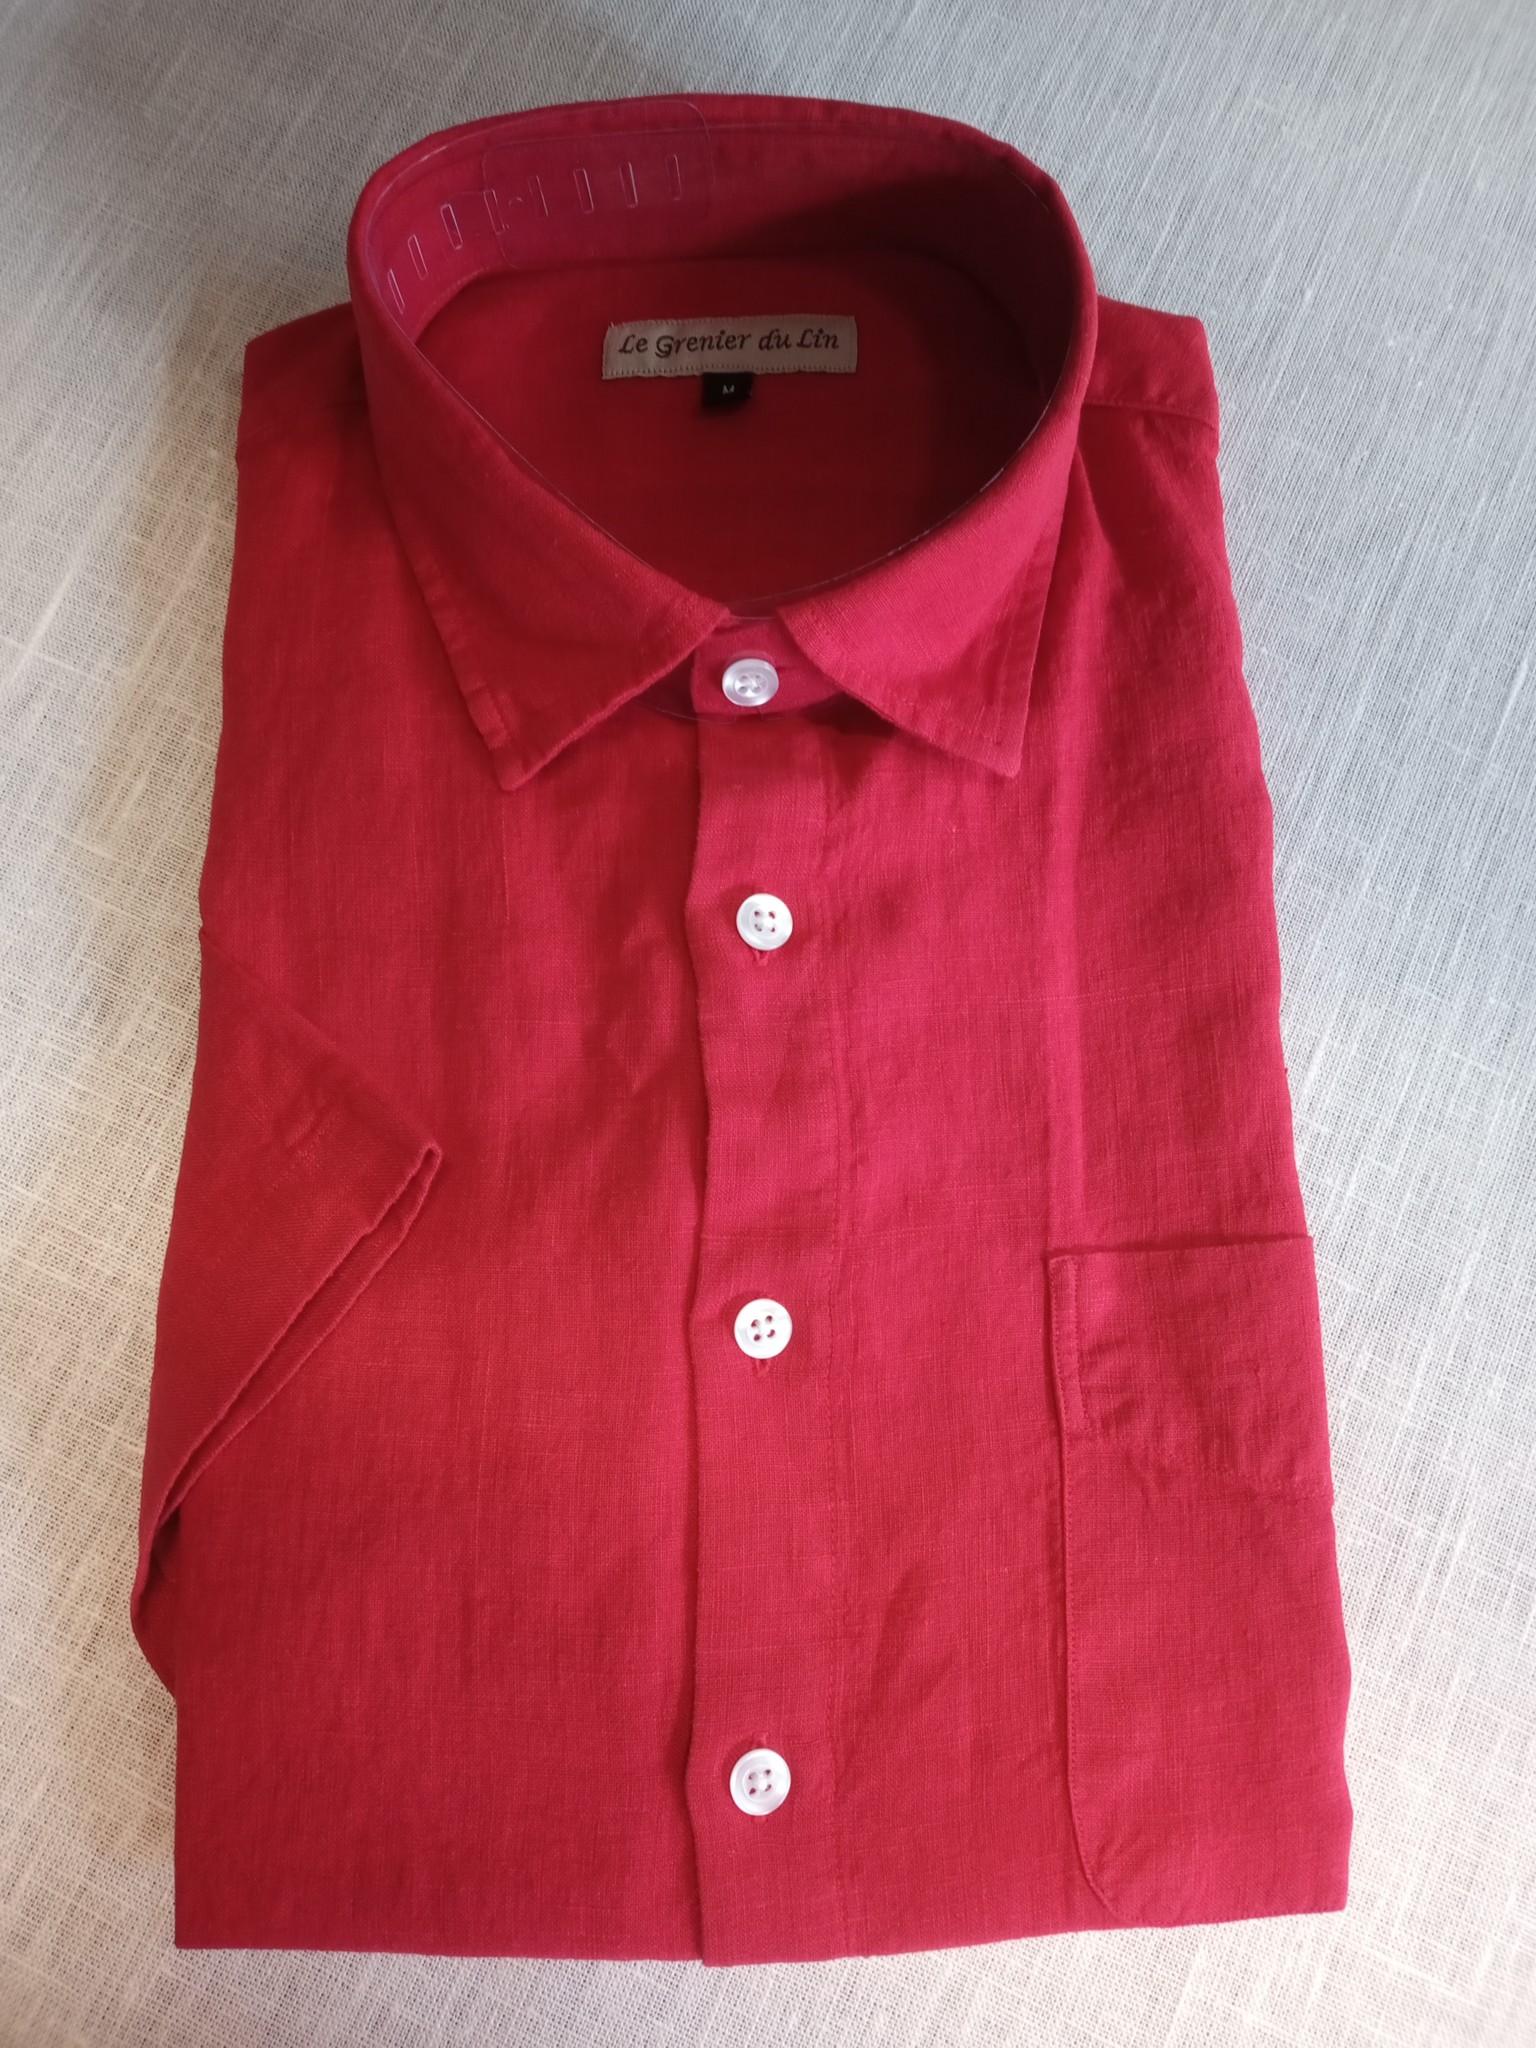 Le grenier du lin Linen shirt, short sleeves, red